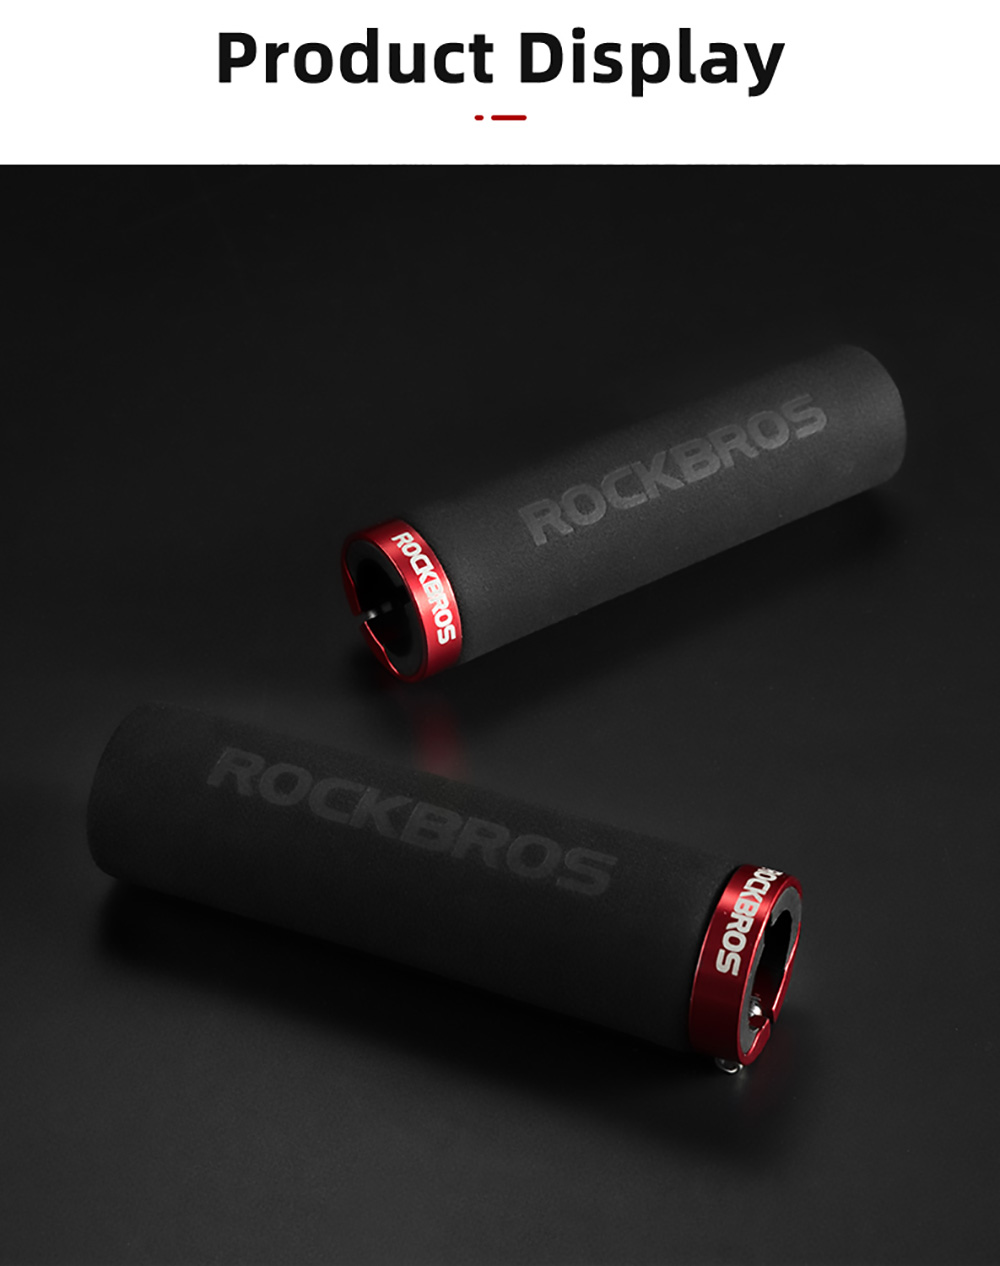 ROCKBROS Bicycle Grip MTB Silicone HandleBar Grip Anti-skid Shock-absorbing Soft Bike Grip Ultralight - Black